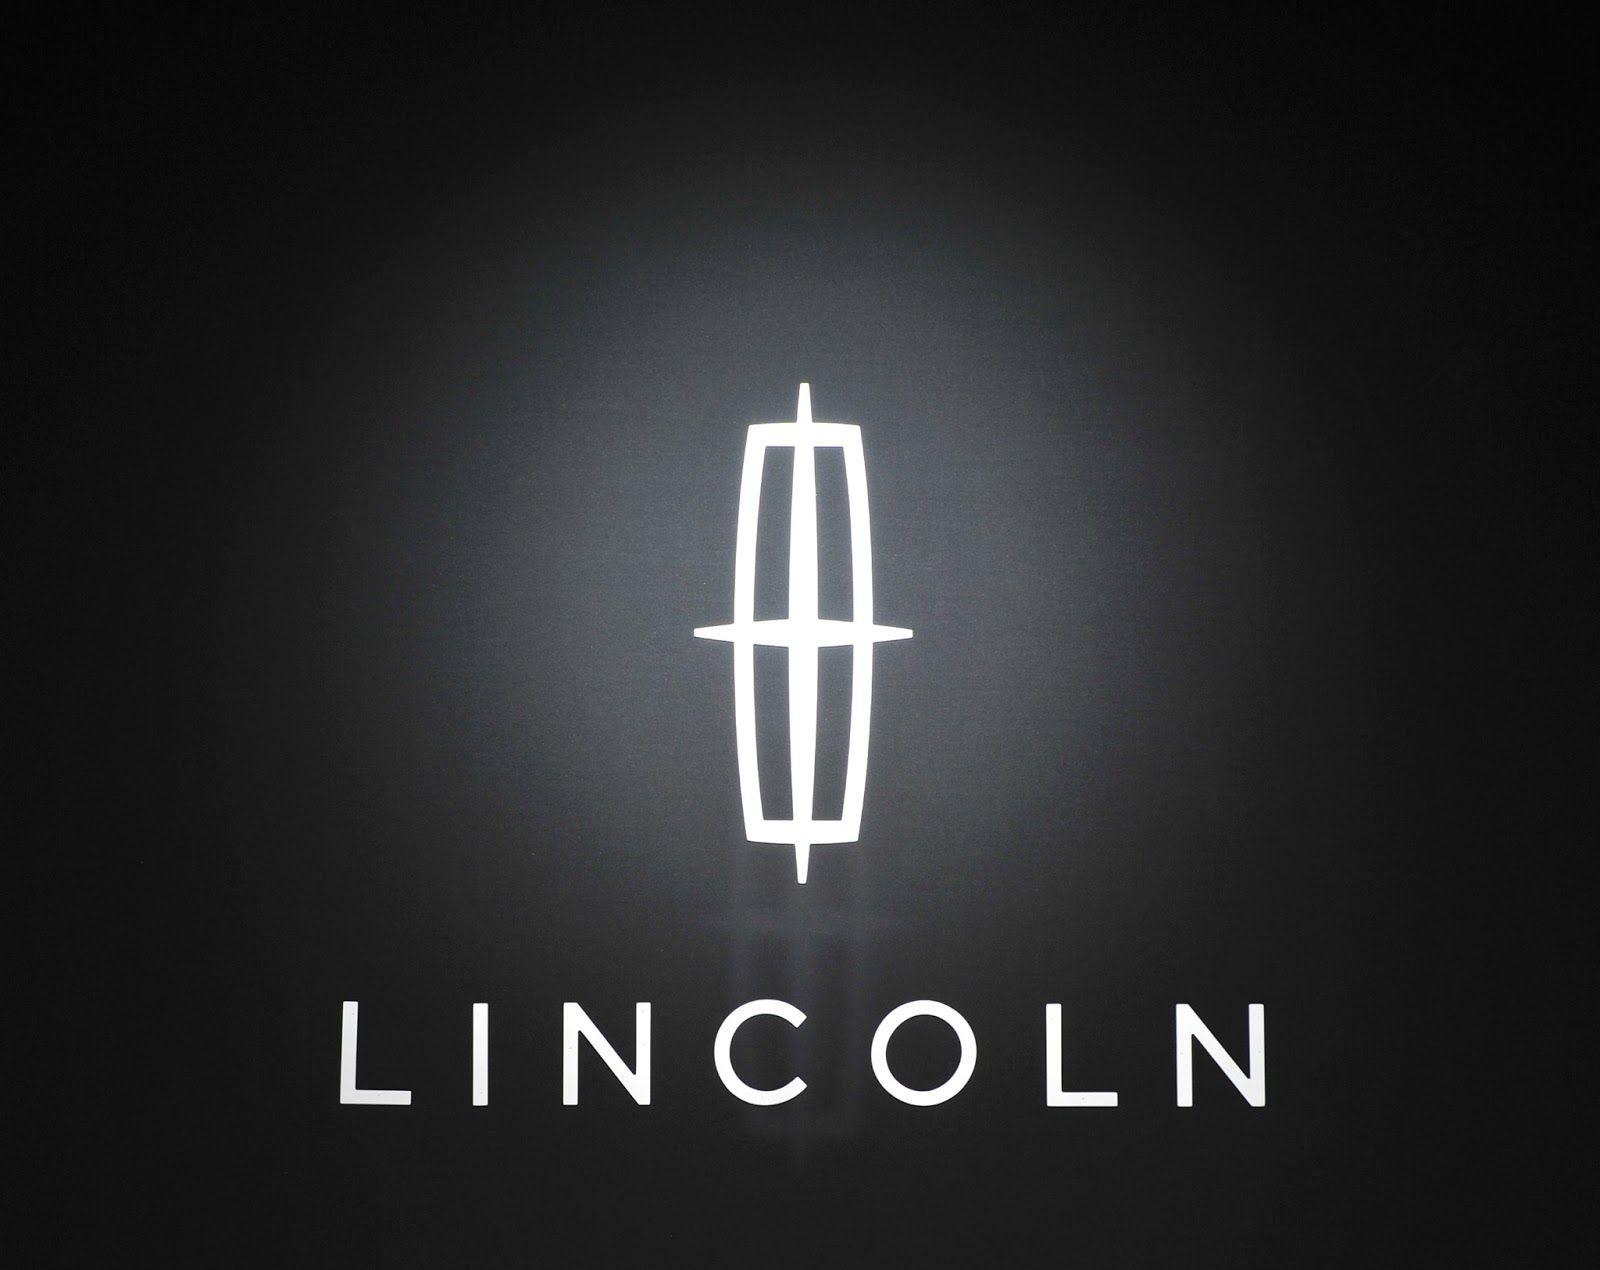 Silver Automotive Company Logo - The color of Lincoln logo is silver. Description from car-brand ...